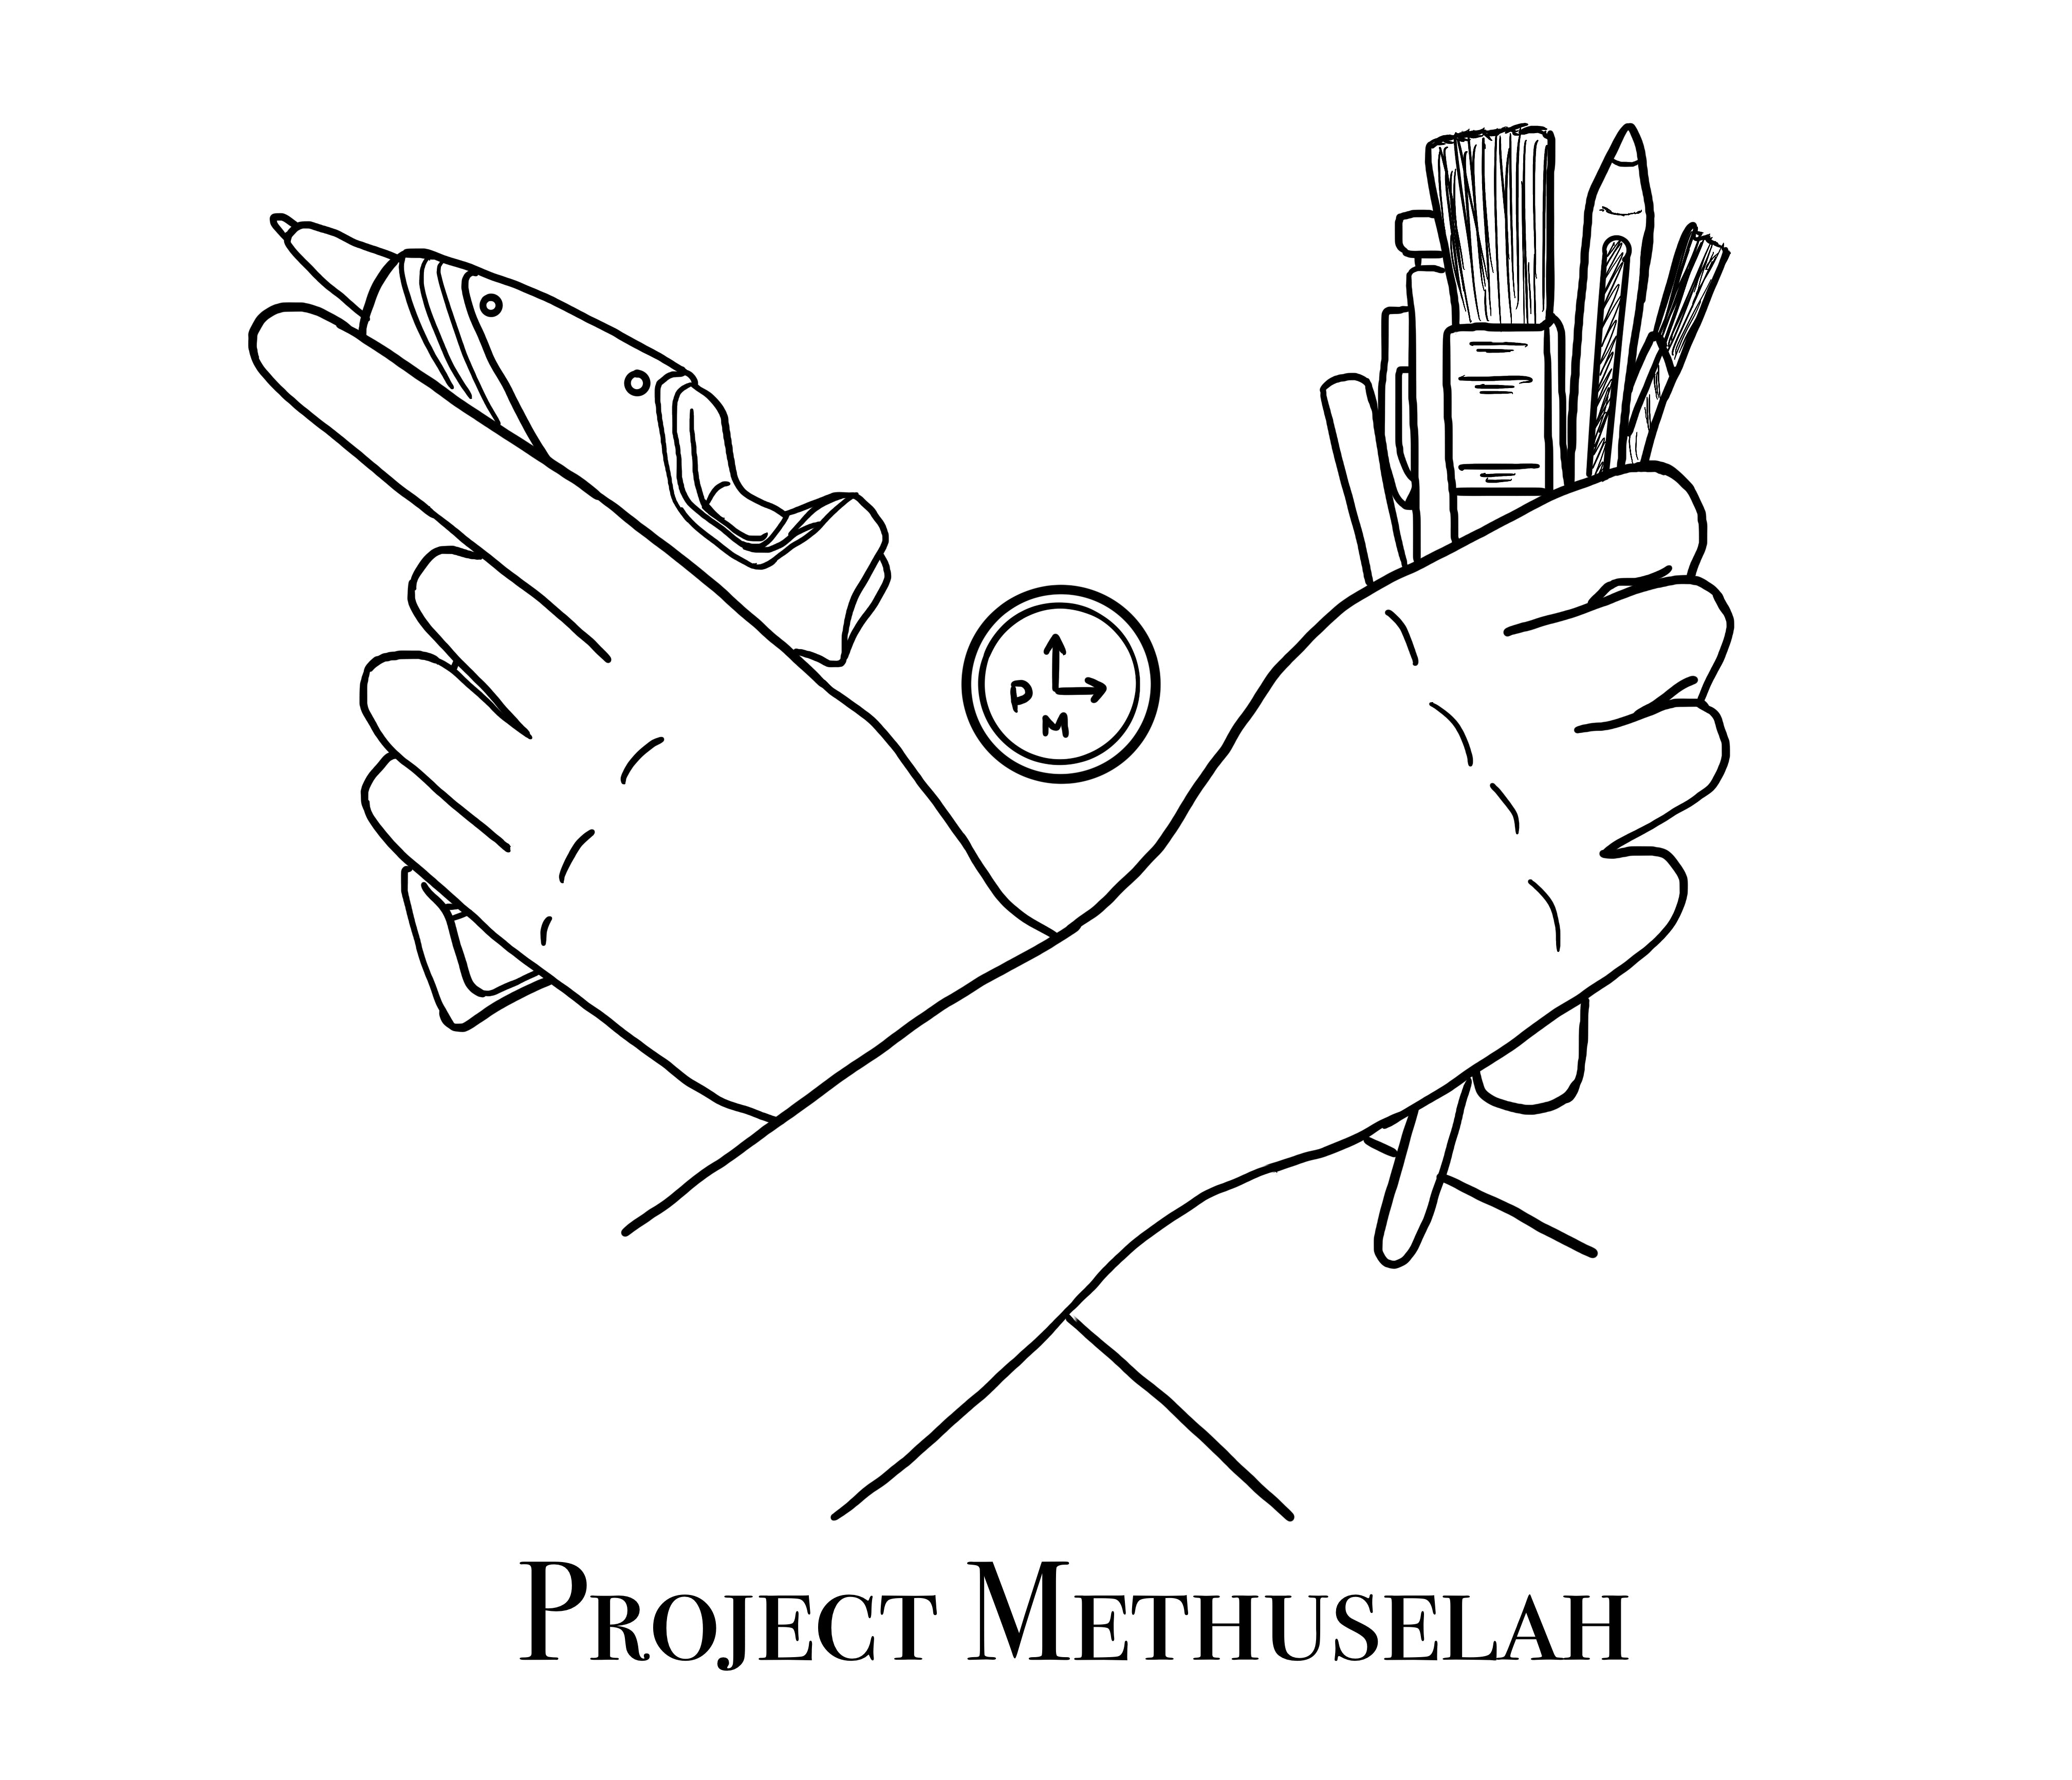 Project Methuselah